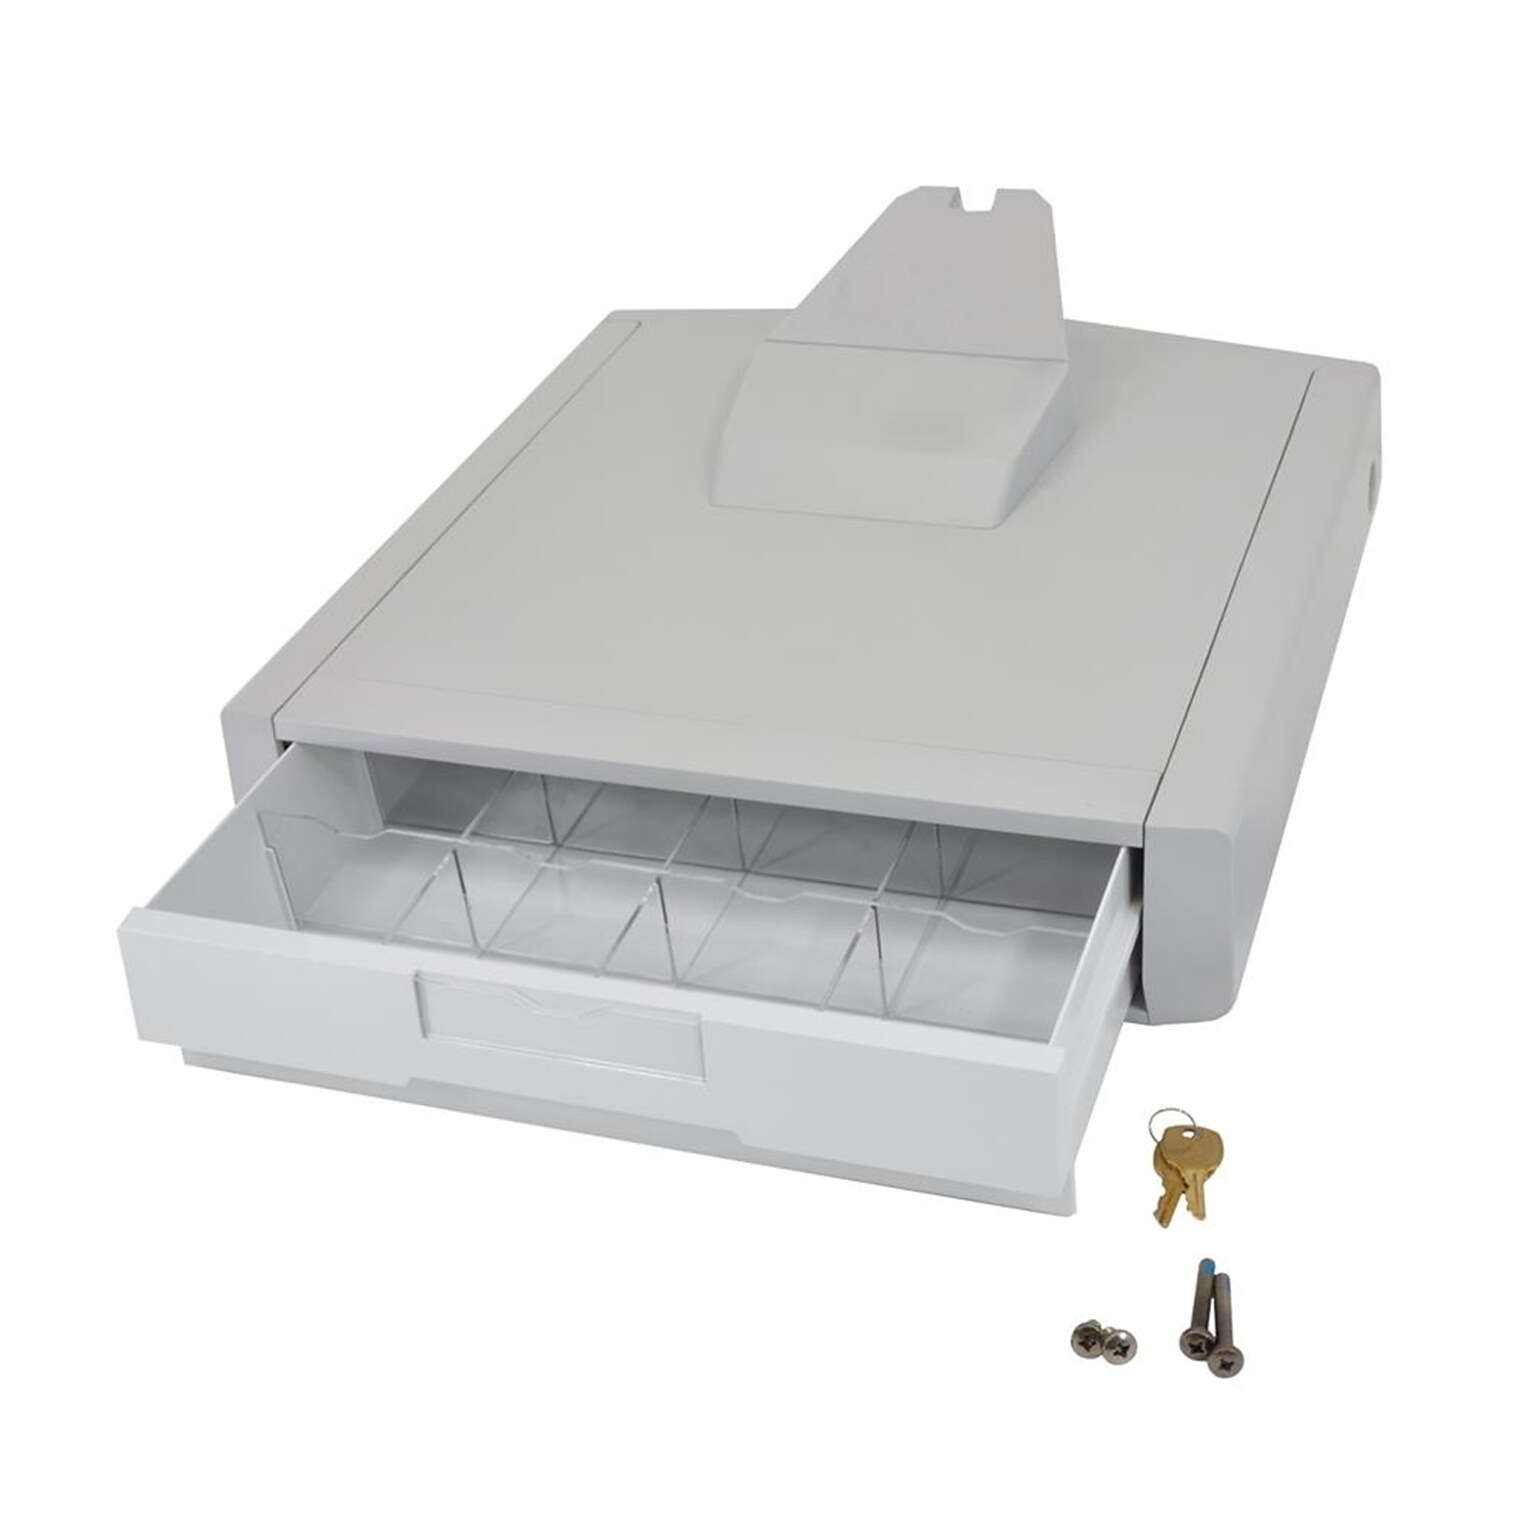 Ergotron 16-Compartment Plastic Drawer Organizer, Gray/White (97-863)